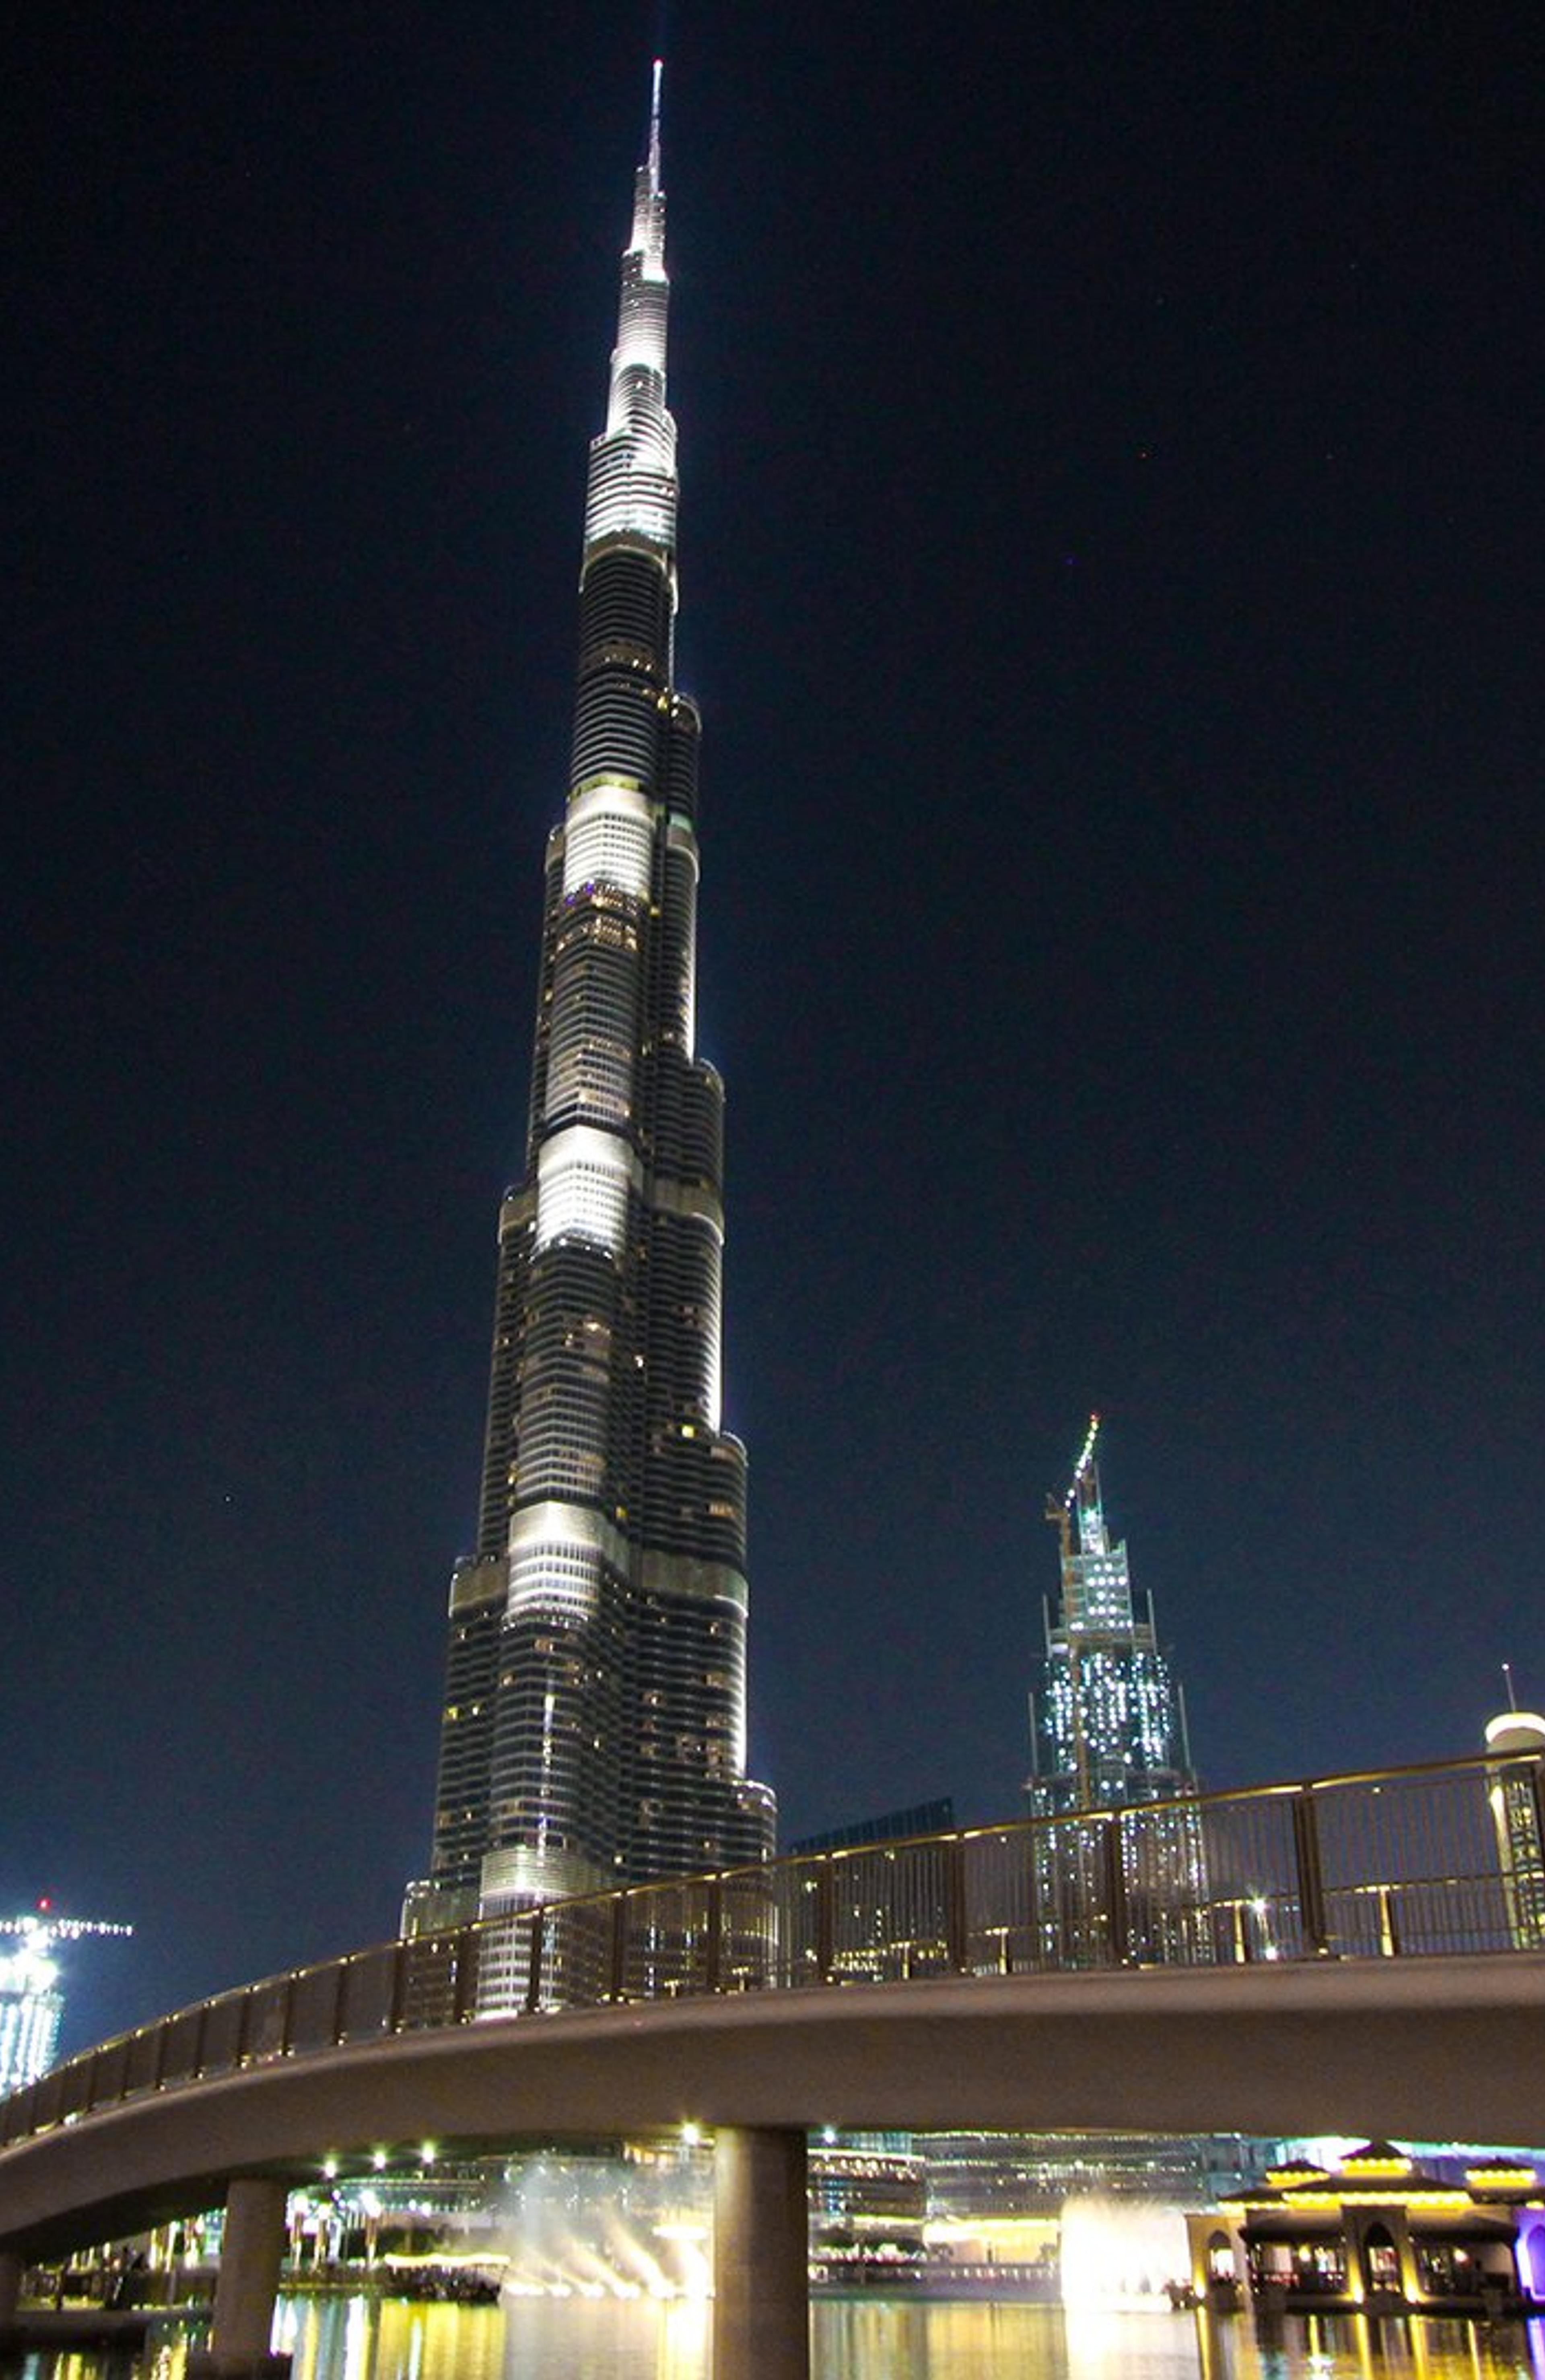 Dubai skyscraper tower in night ligst